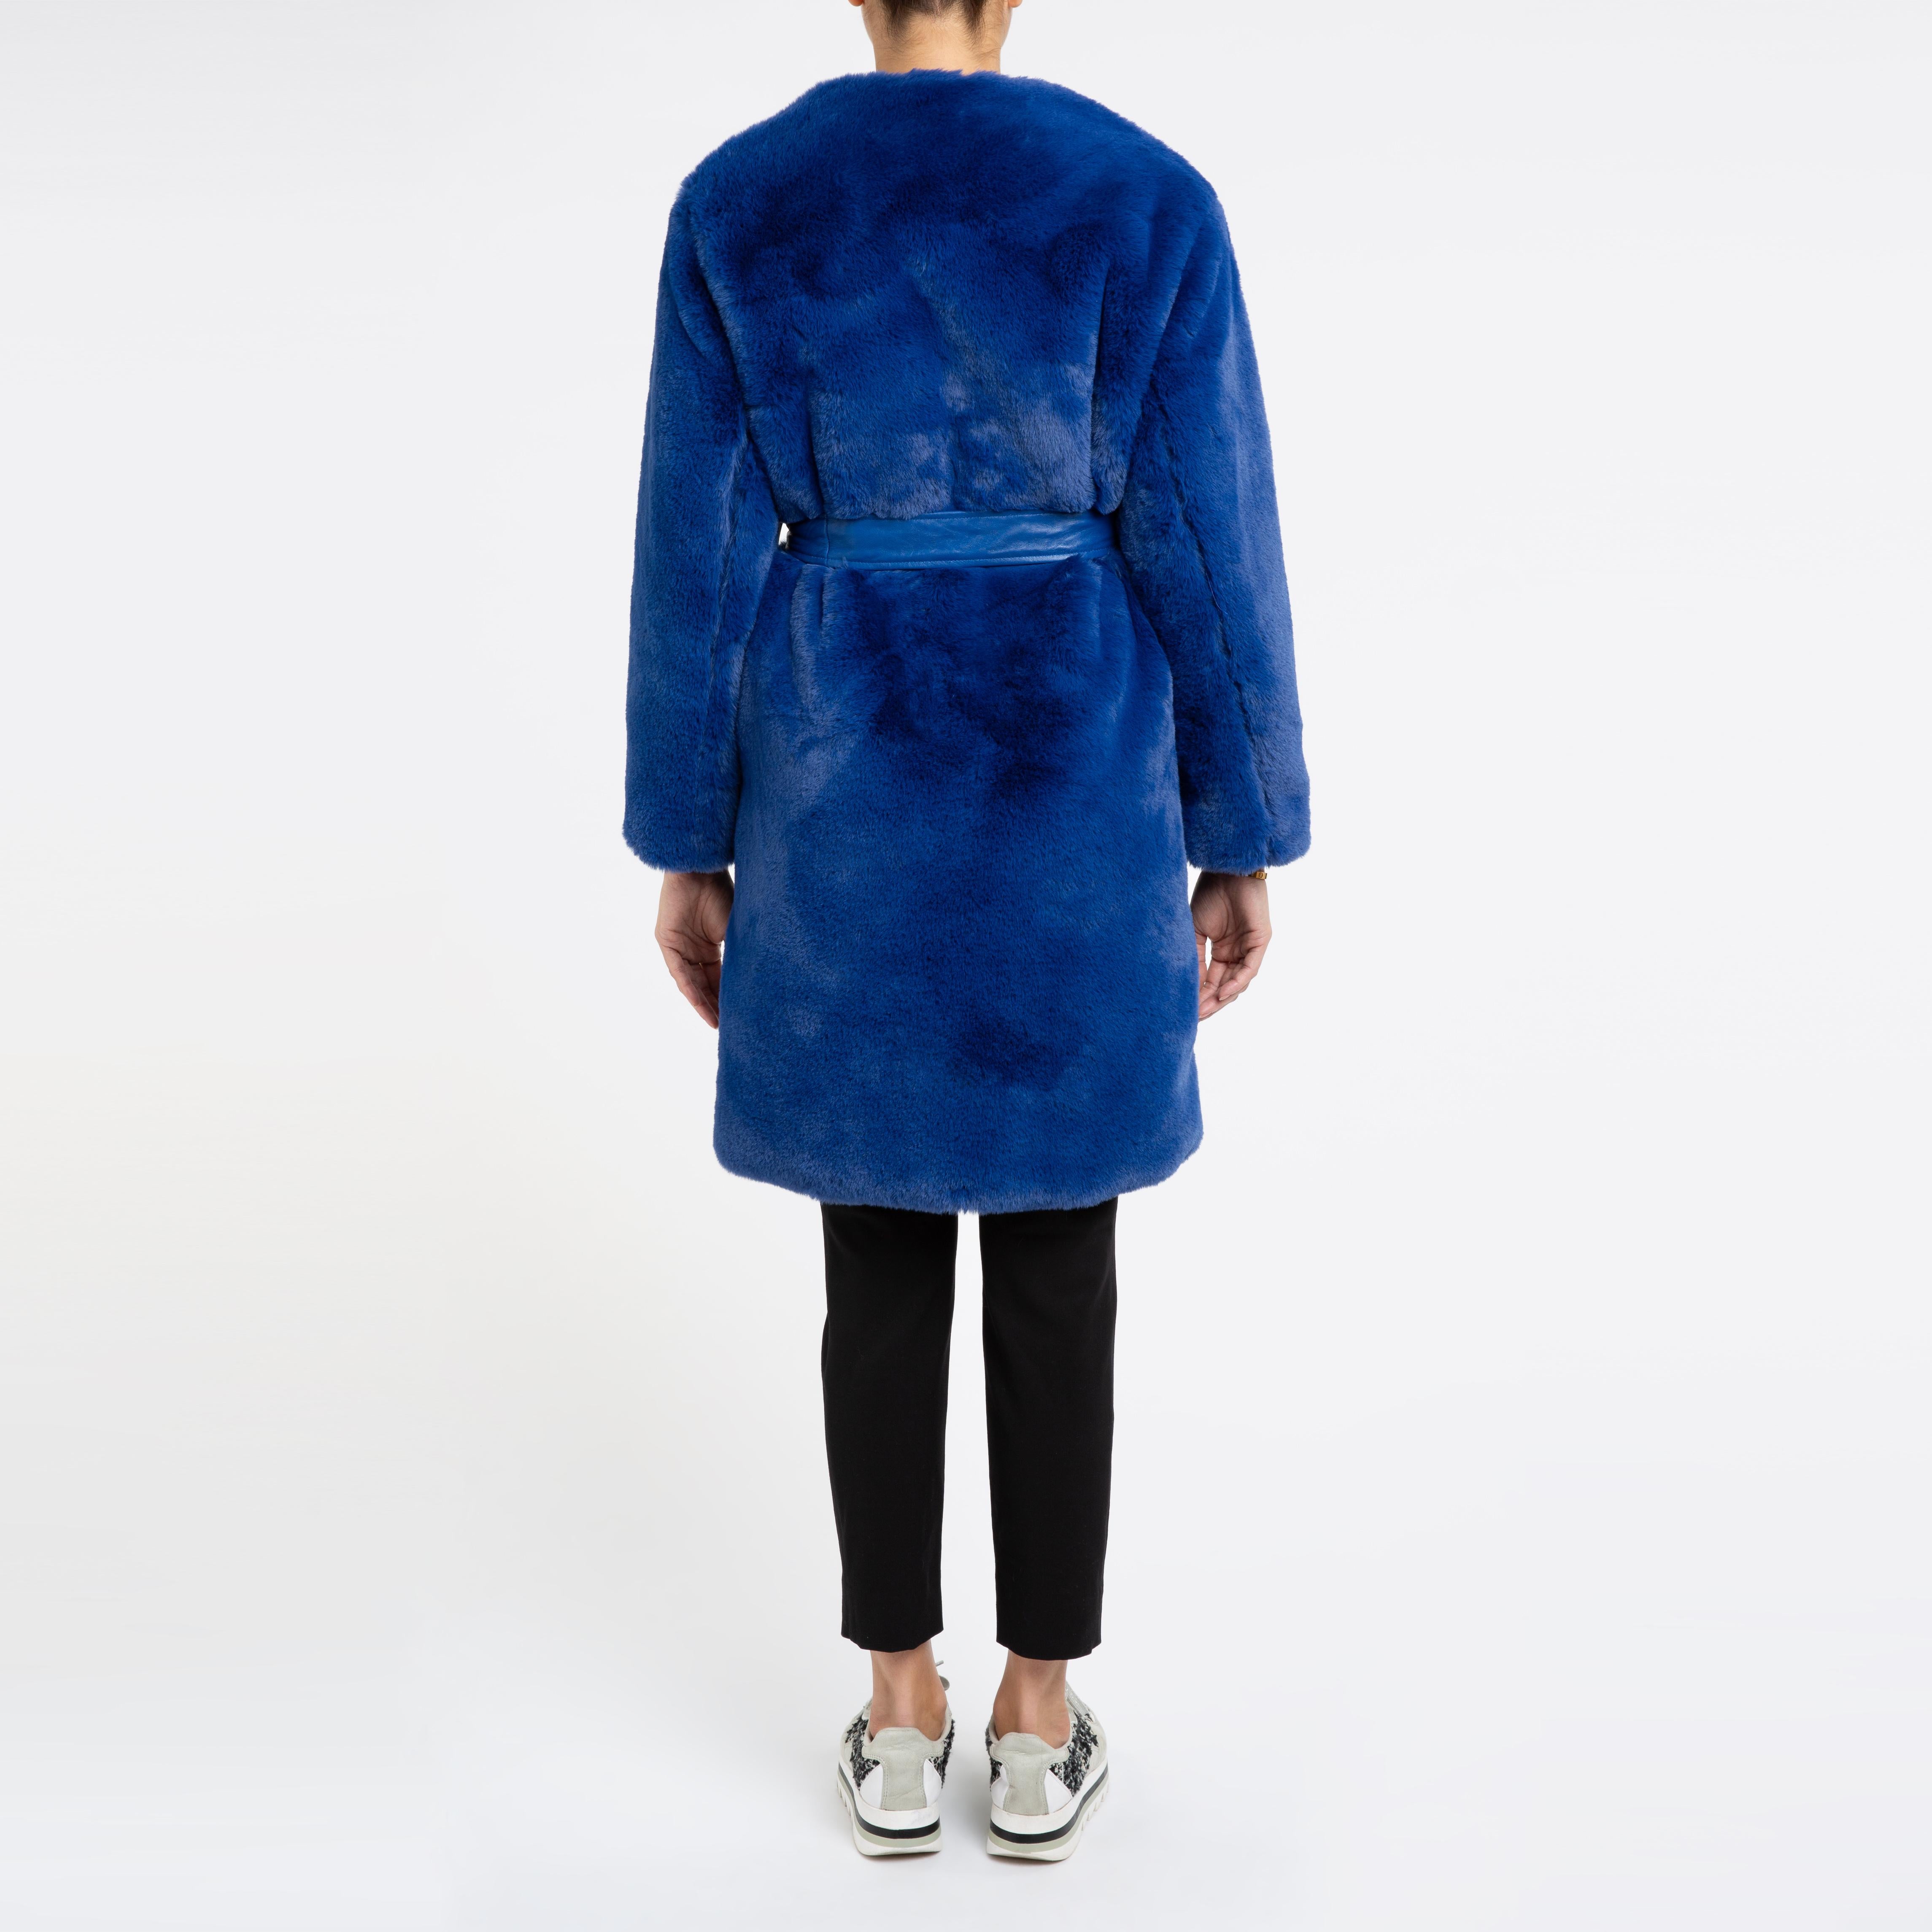 Verheyen London Serena  Collarless Faux Fur Coat in Blue - Size uk 8 For Sale 4